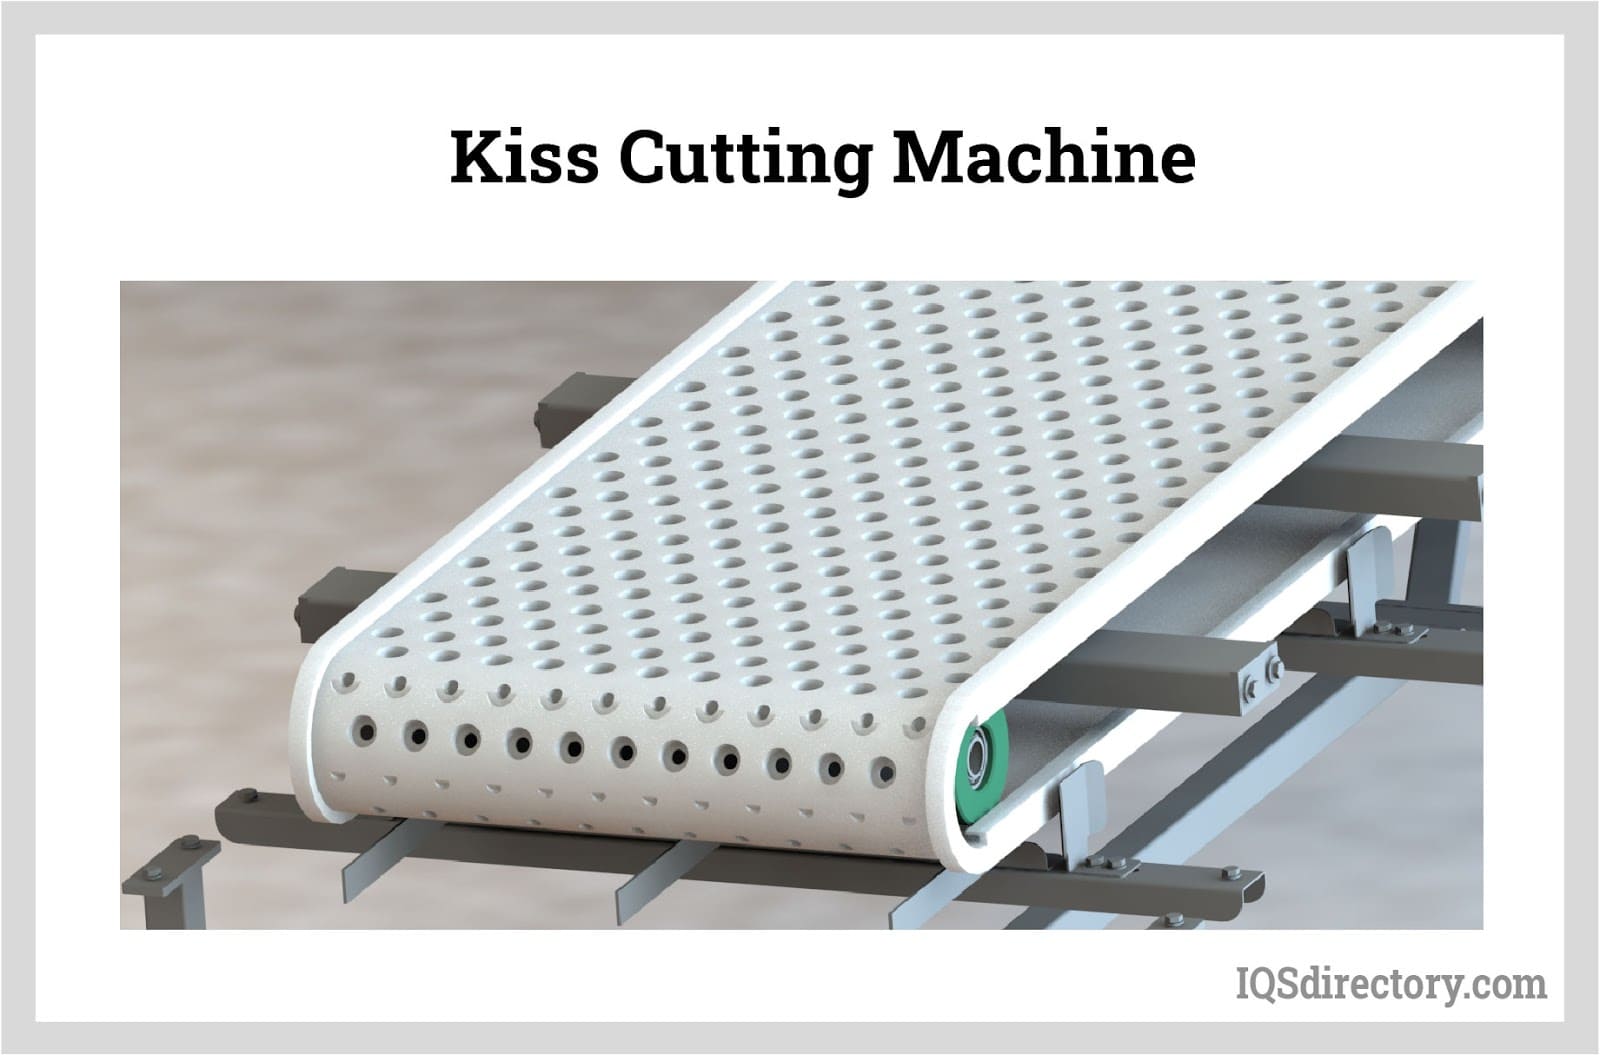 Kiss Cutting Machine